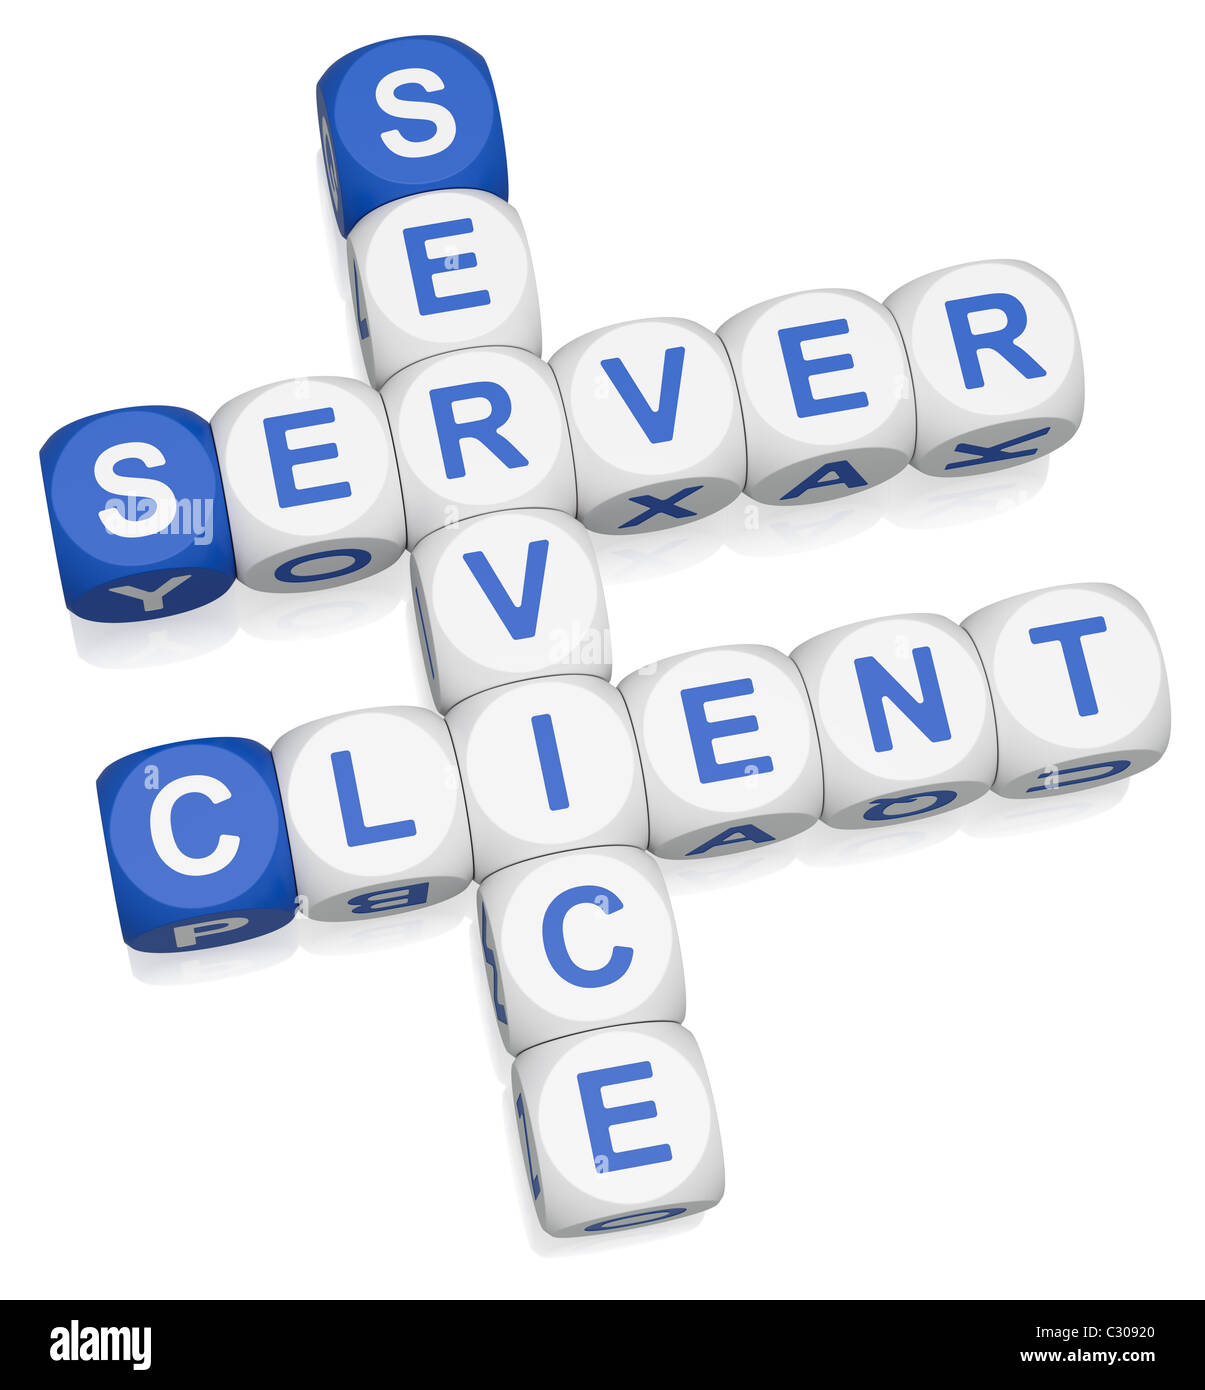 Client-Server computing crossword on white background Stock Photo